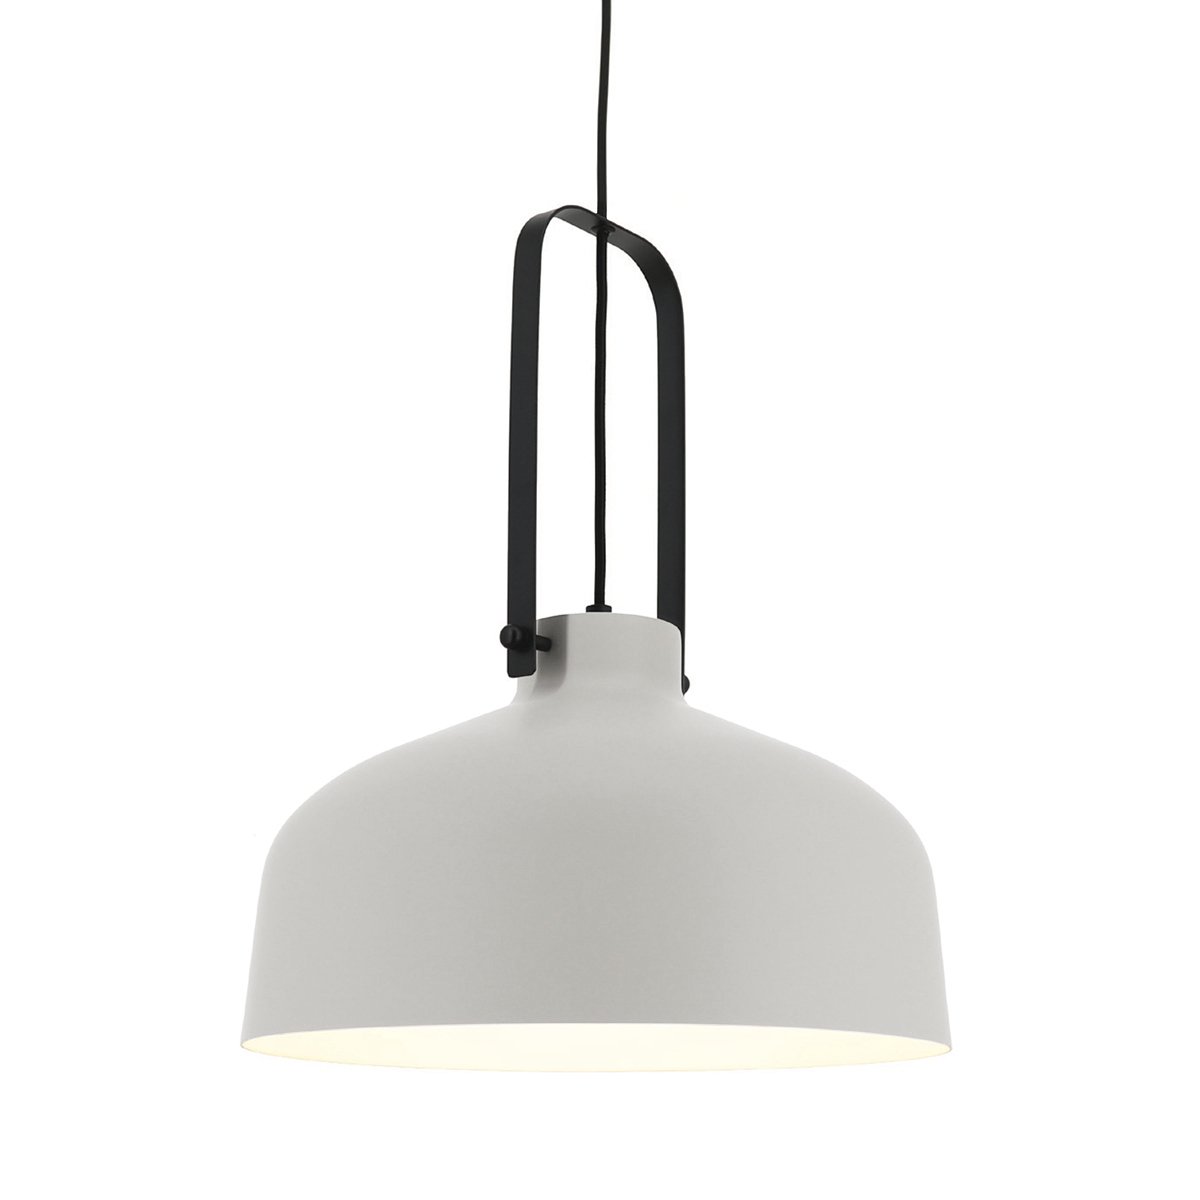 Fabrik lampe industriel hvid Vaglia - Ø 37,5 cm